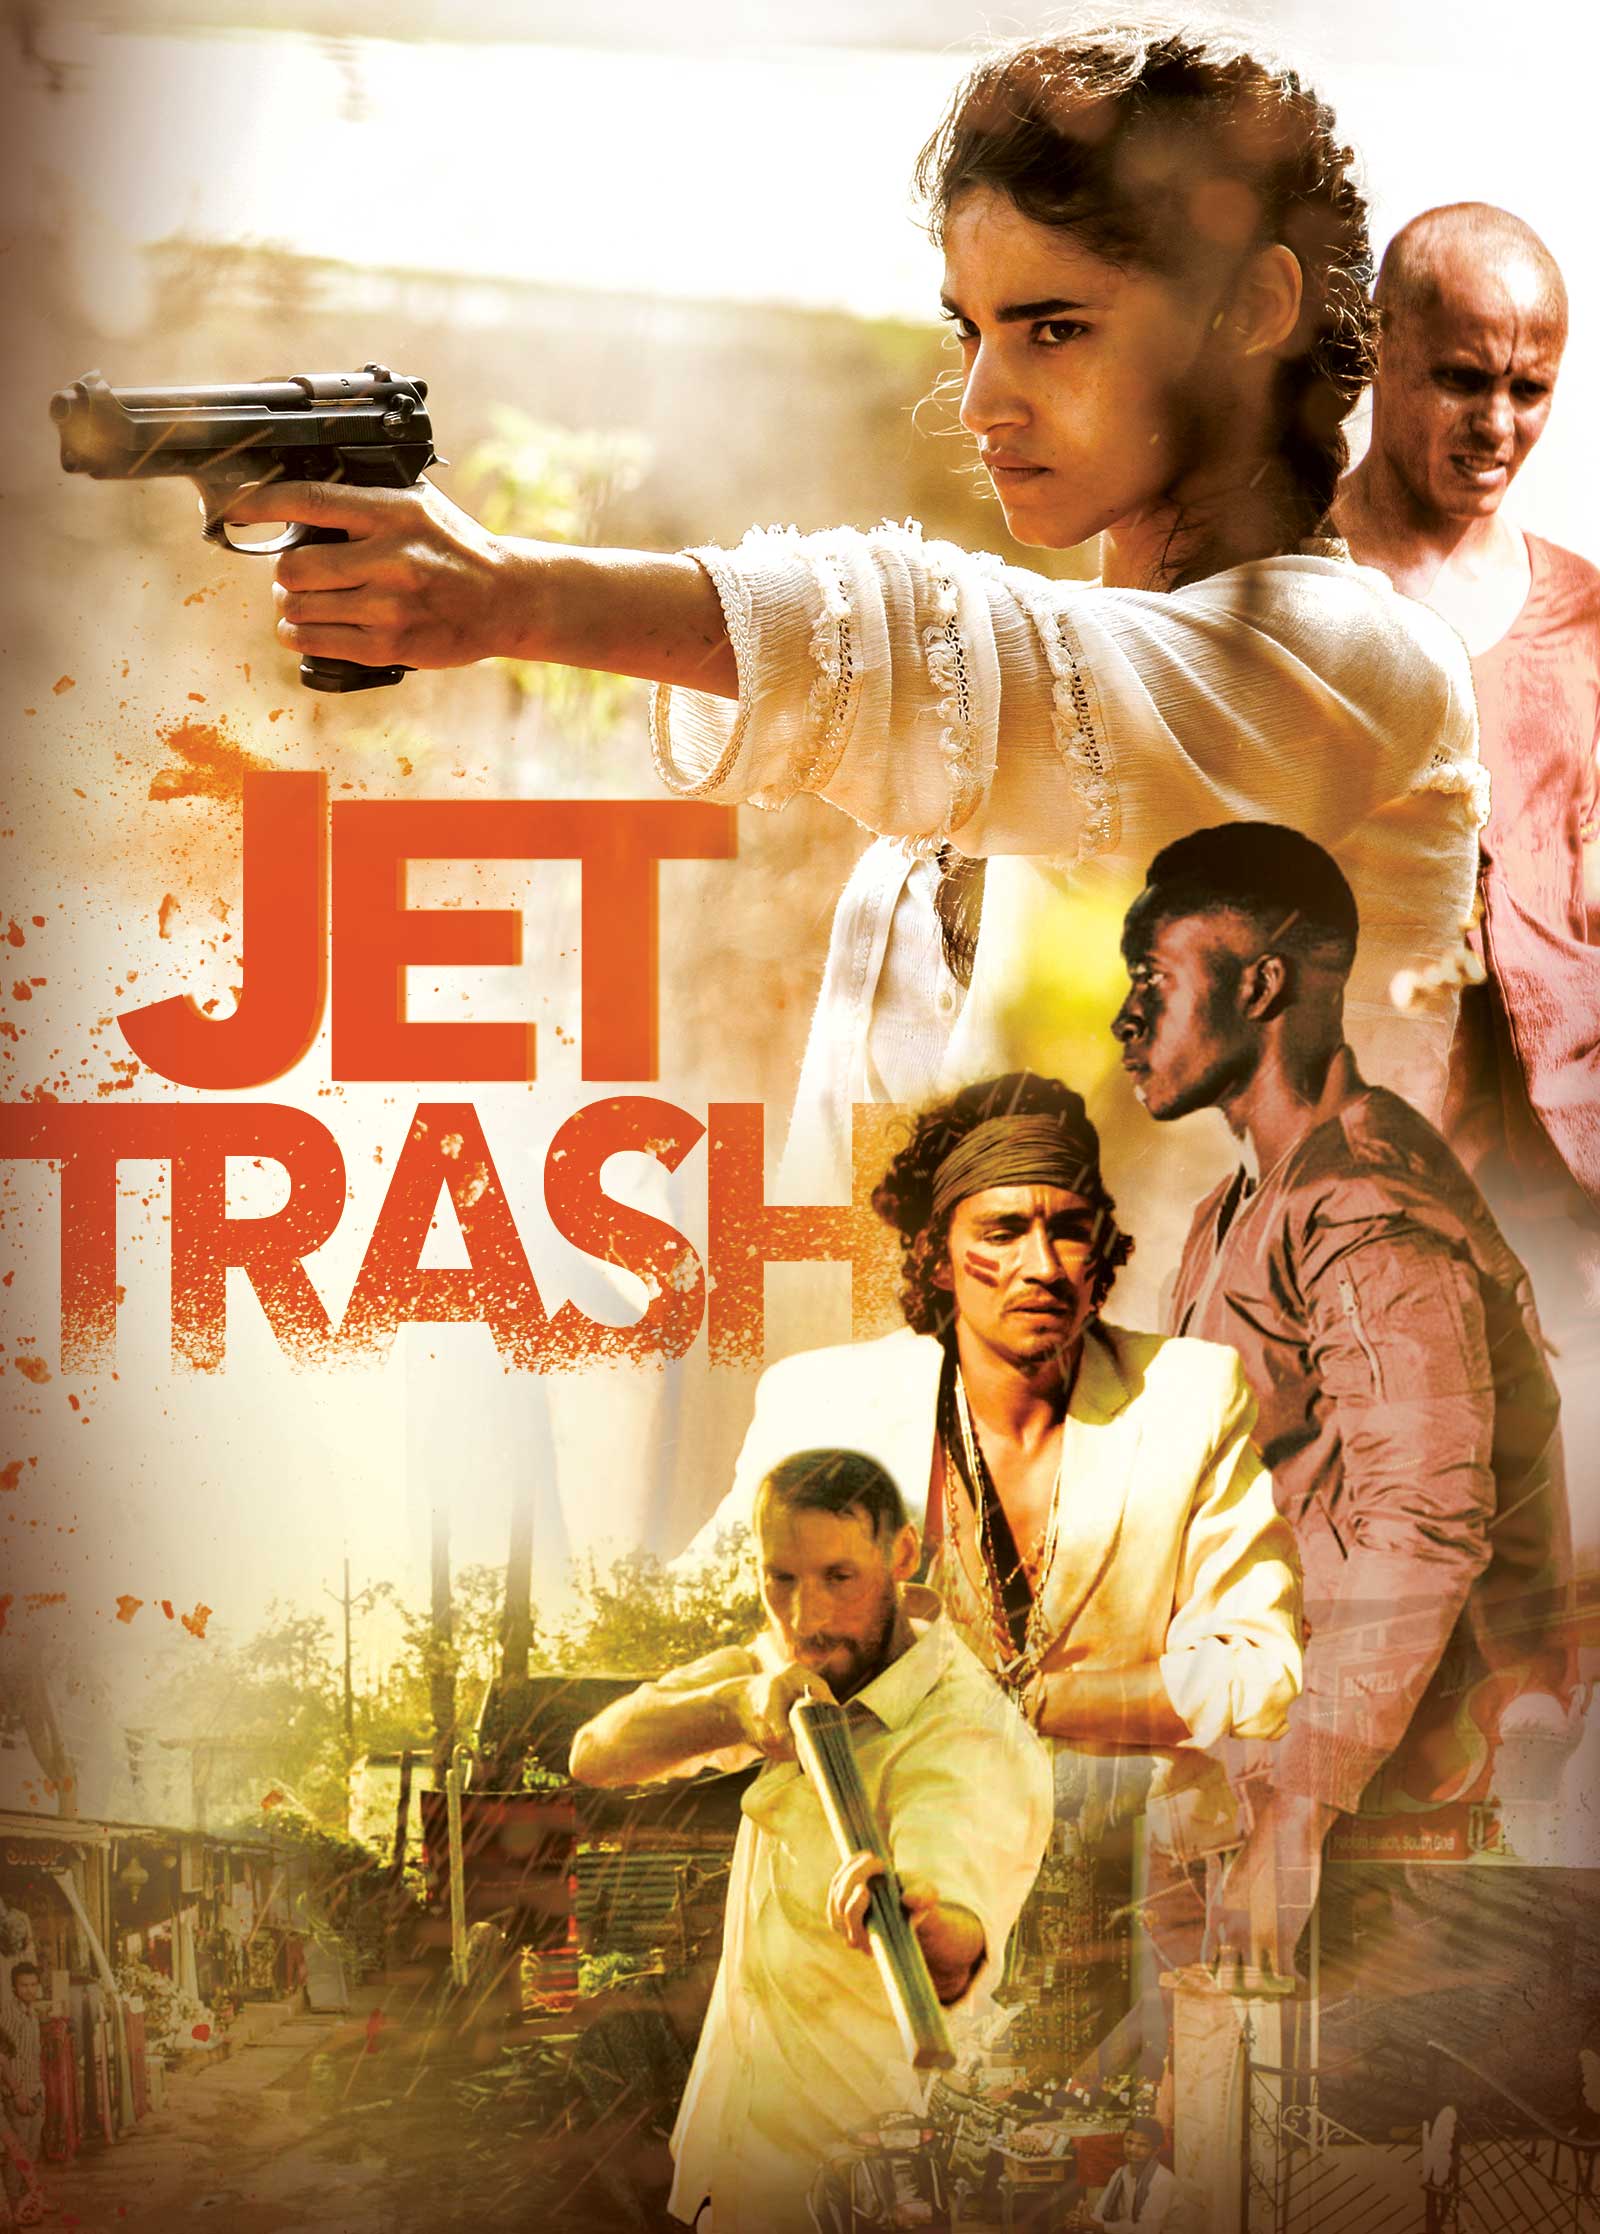 Nonton film Jet Trash layarkaca21 indoxx1 ganool online streaming terbaru